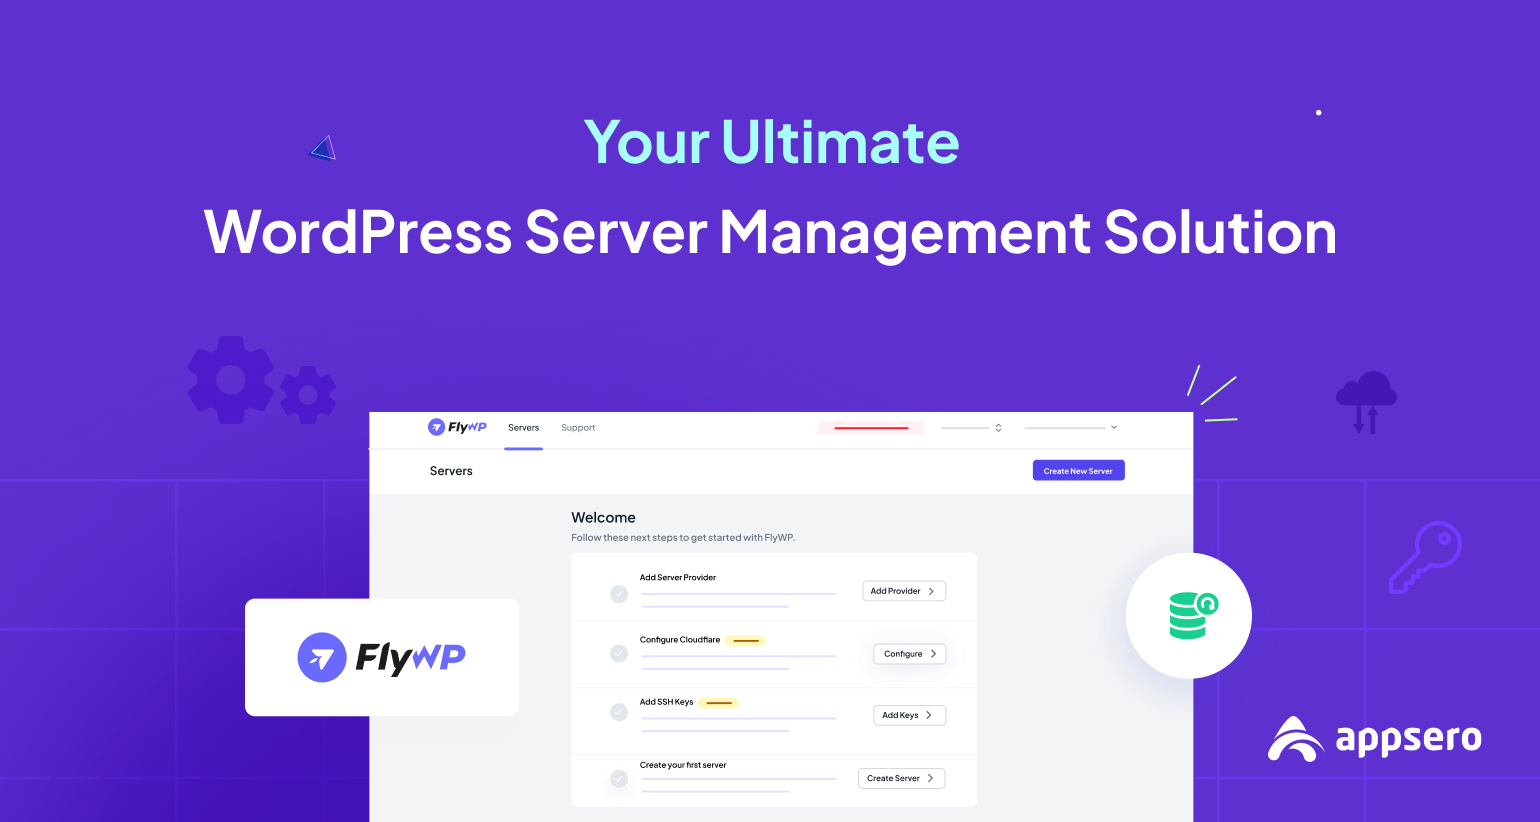 FlyWP server management system for WordPress